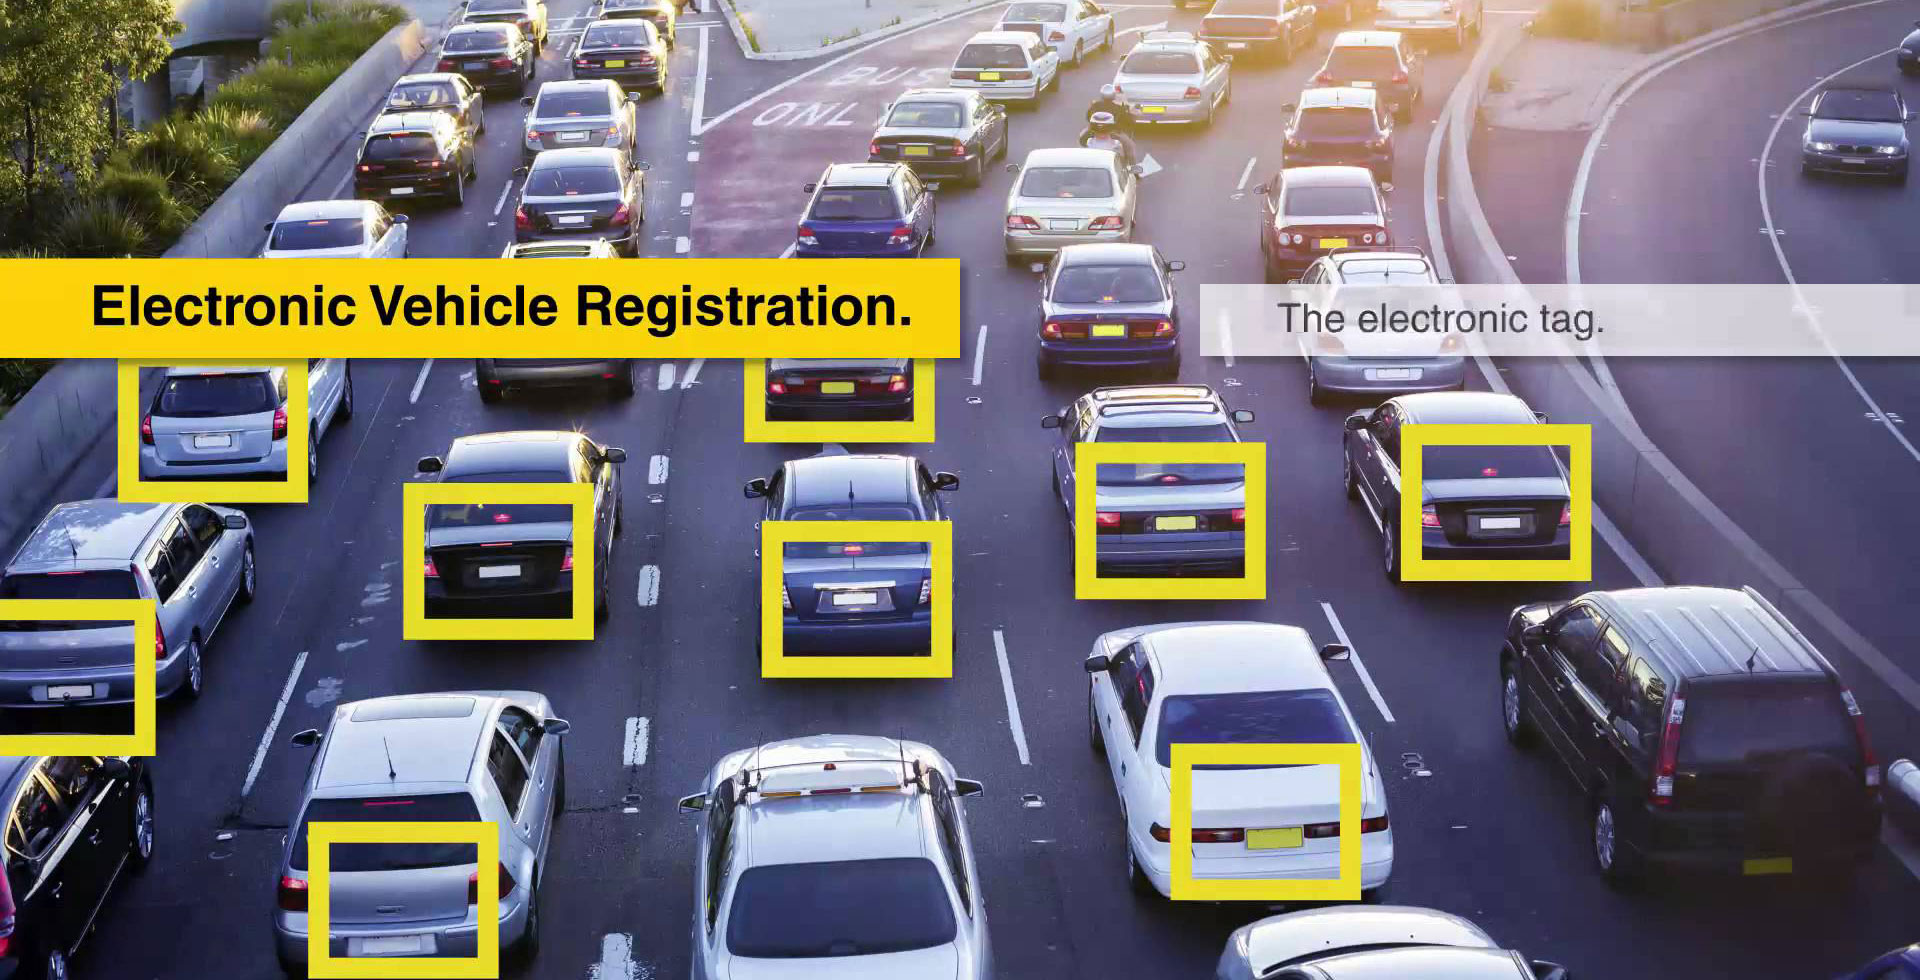 Electronic Vehicle Registration